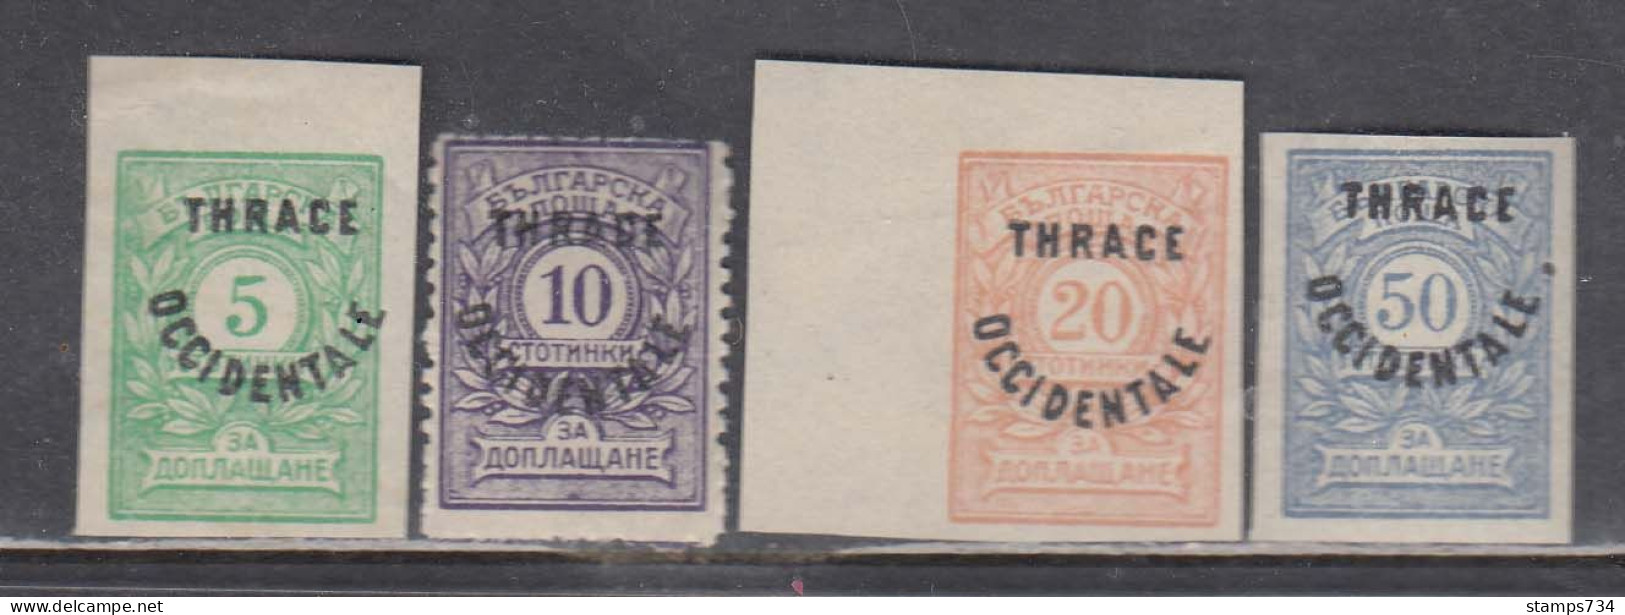 Thrace 1920 - Porto, Marken Mit Aufdruck "Thrace Occidentale", Mi-nr. Porto 4, 5A, 6, 7, MNH - Thrace